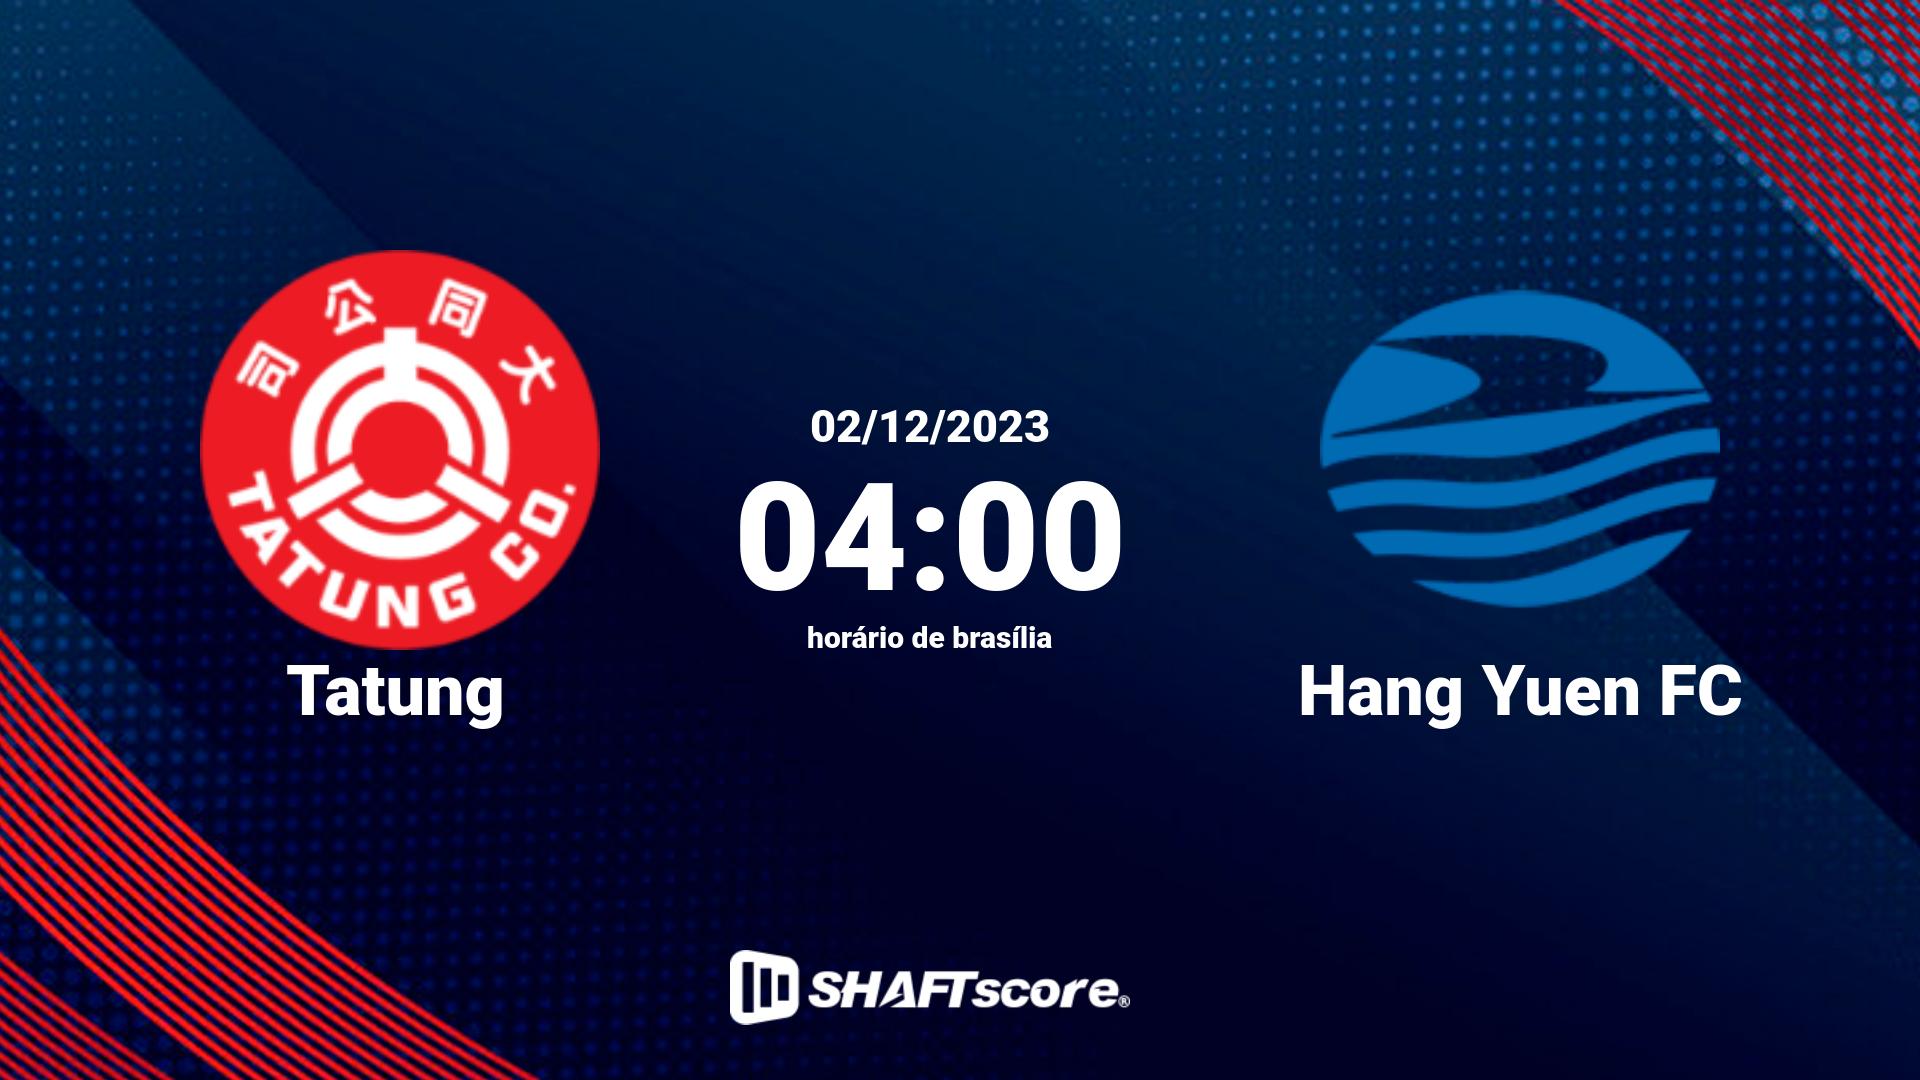 Estatísticas do jogo Tatung vs Hang Yuen FC 02.12 04:00